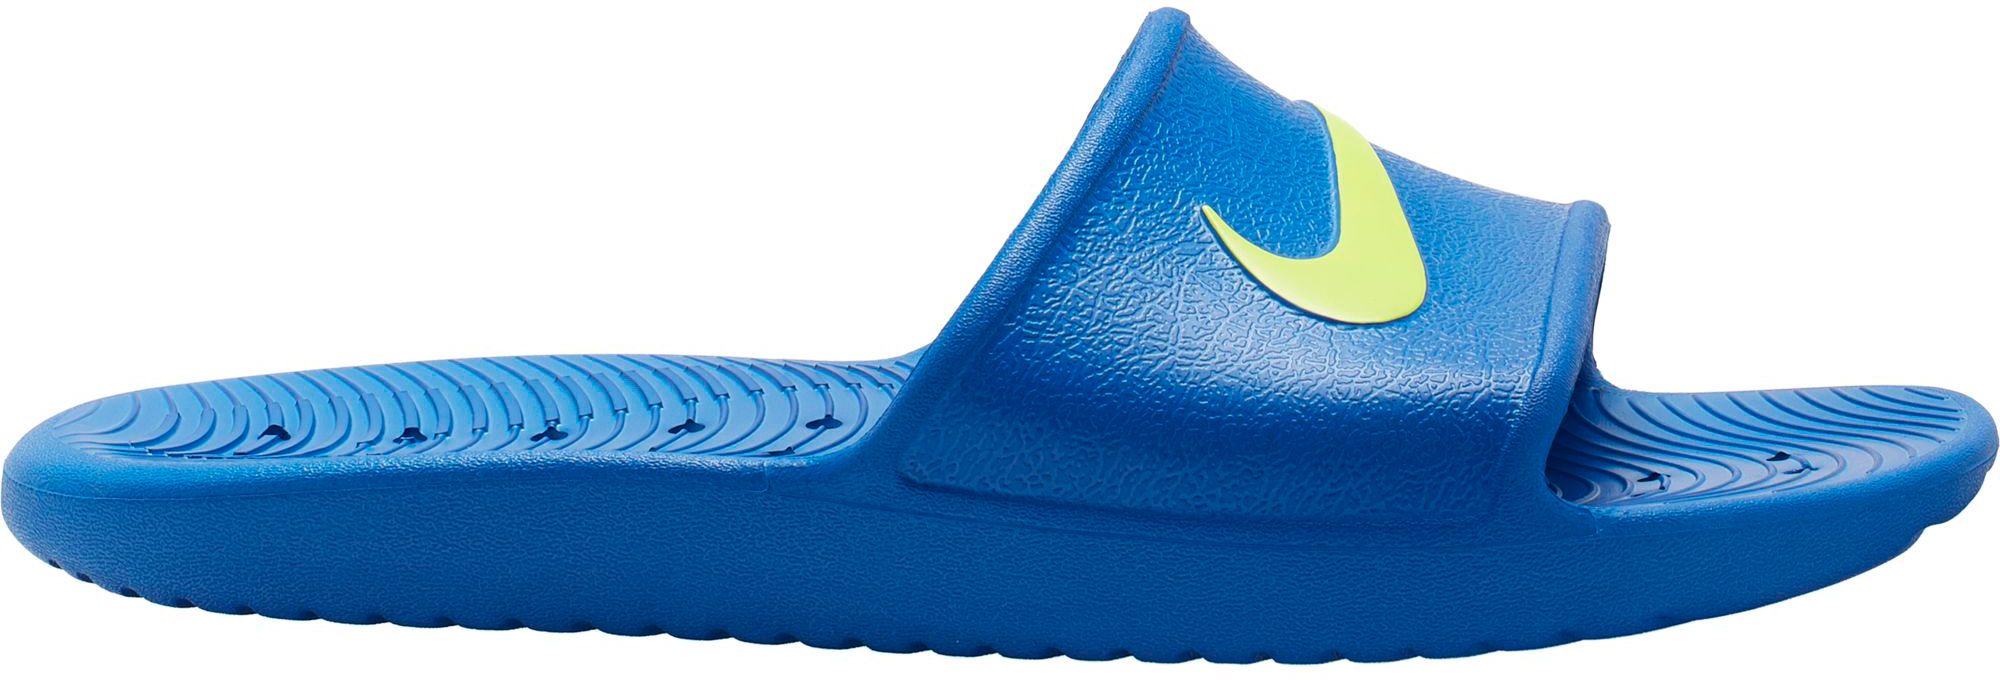 blue nike sandals